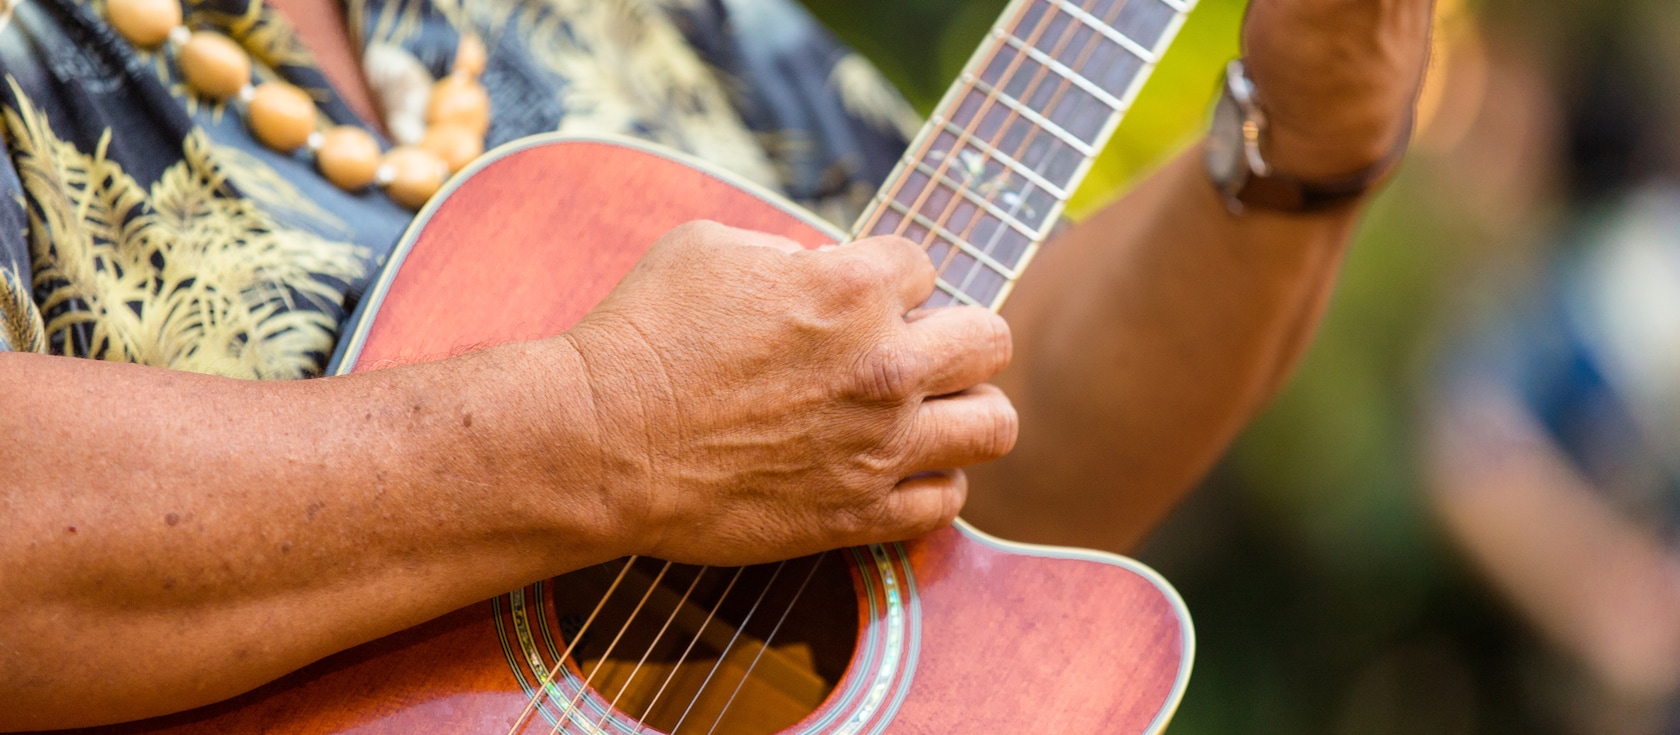 A hand gently strums a guitar